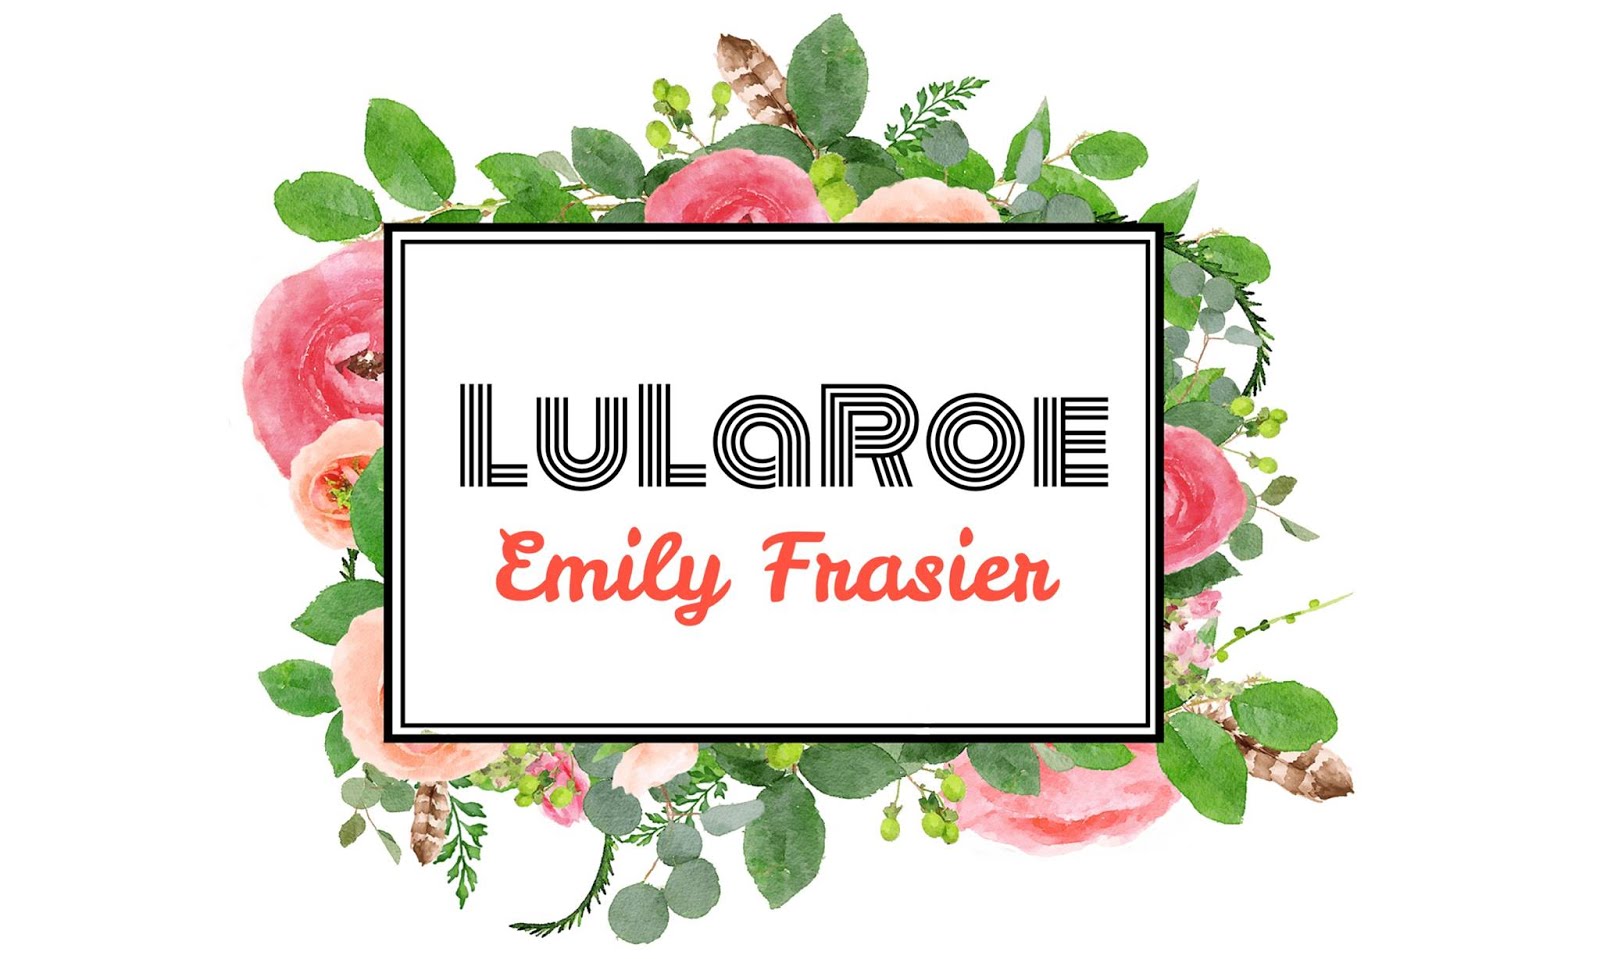 LuLaRoe Emily Frasier's Boutique